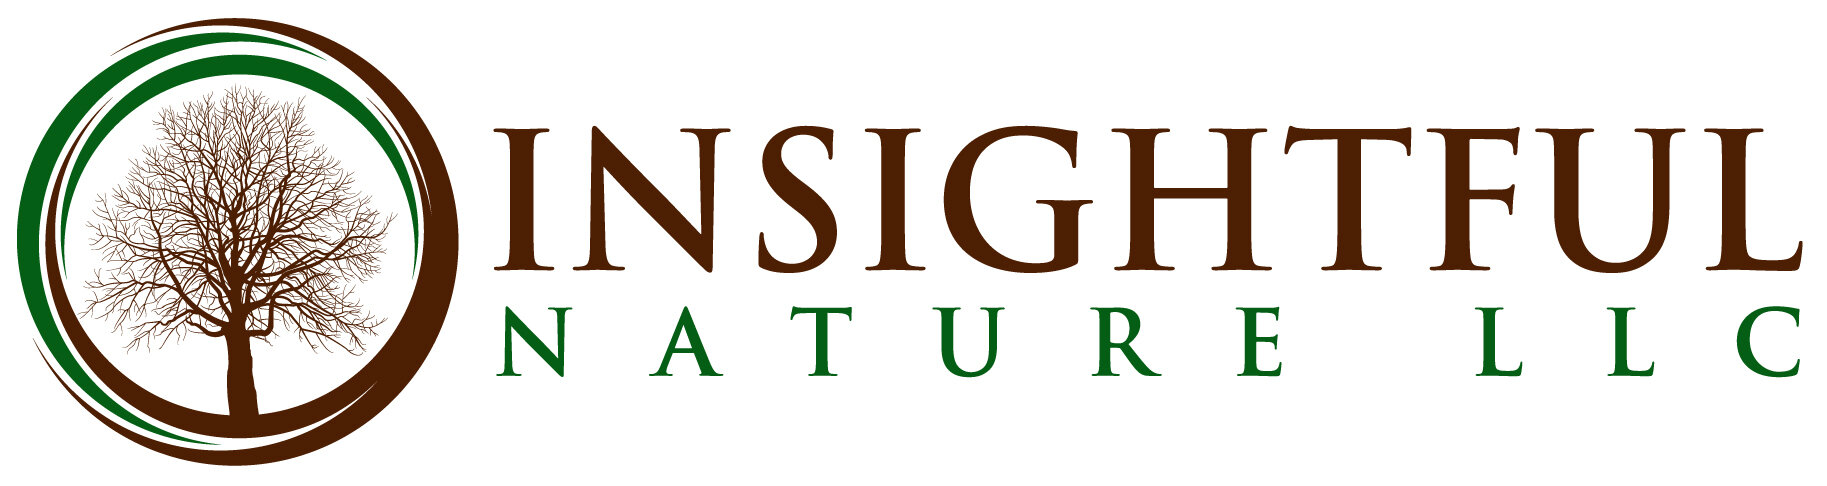 Insightful_Nature_Logo.jpg